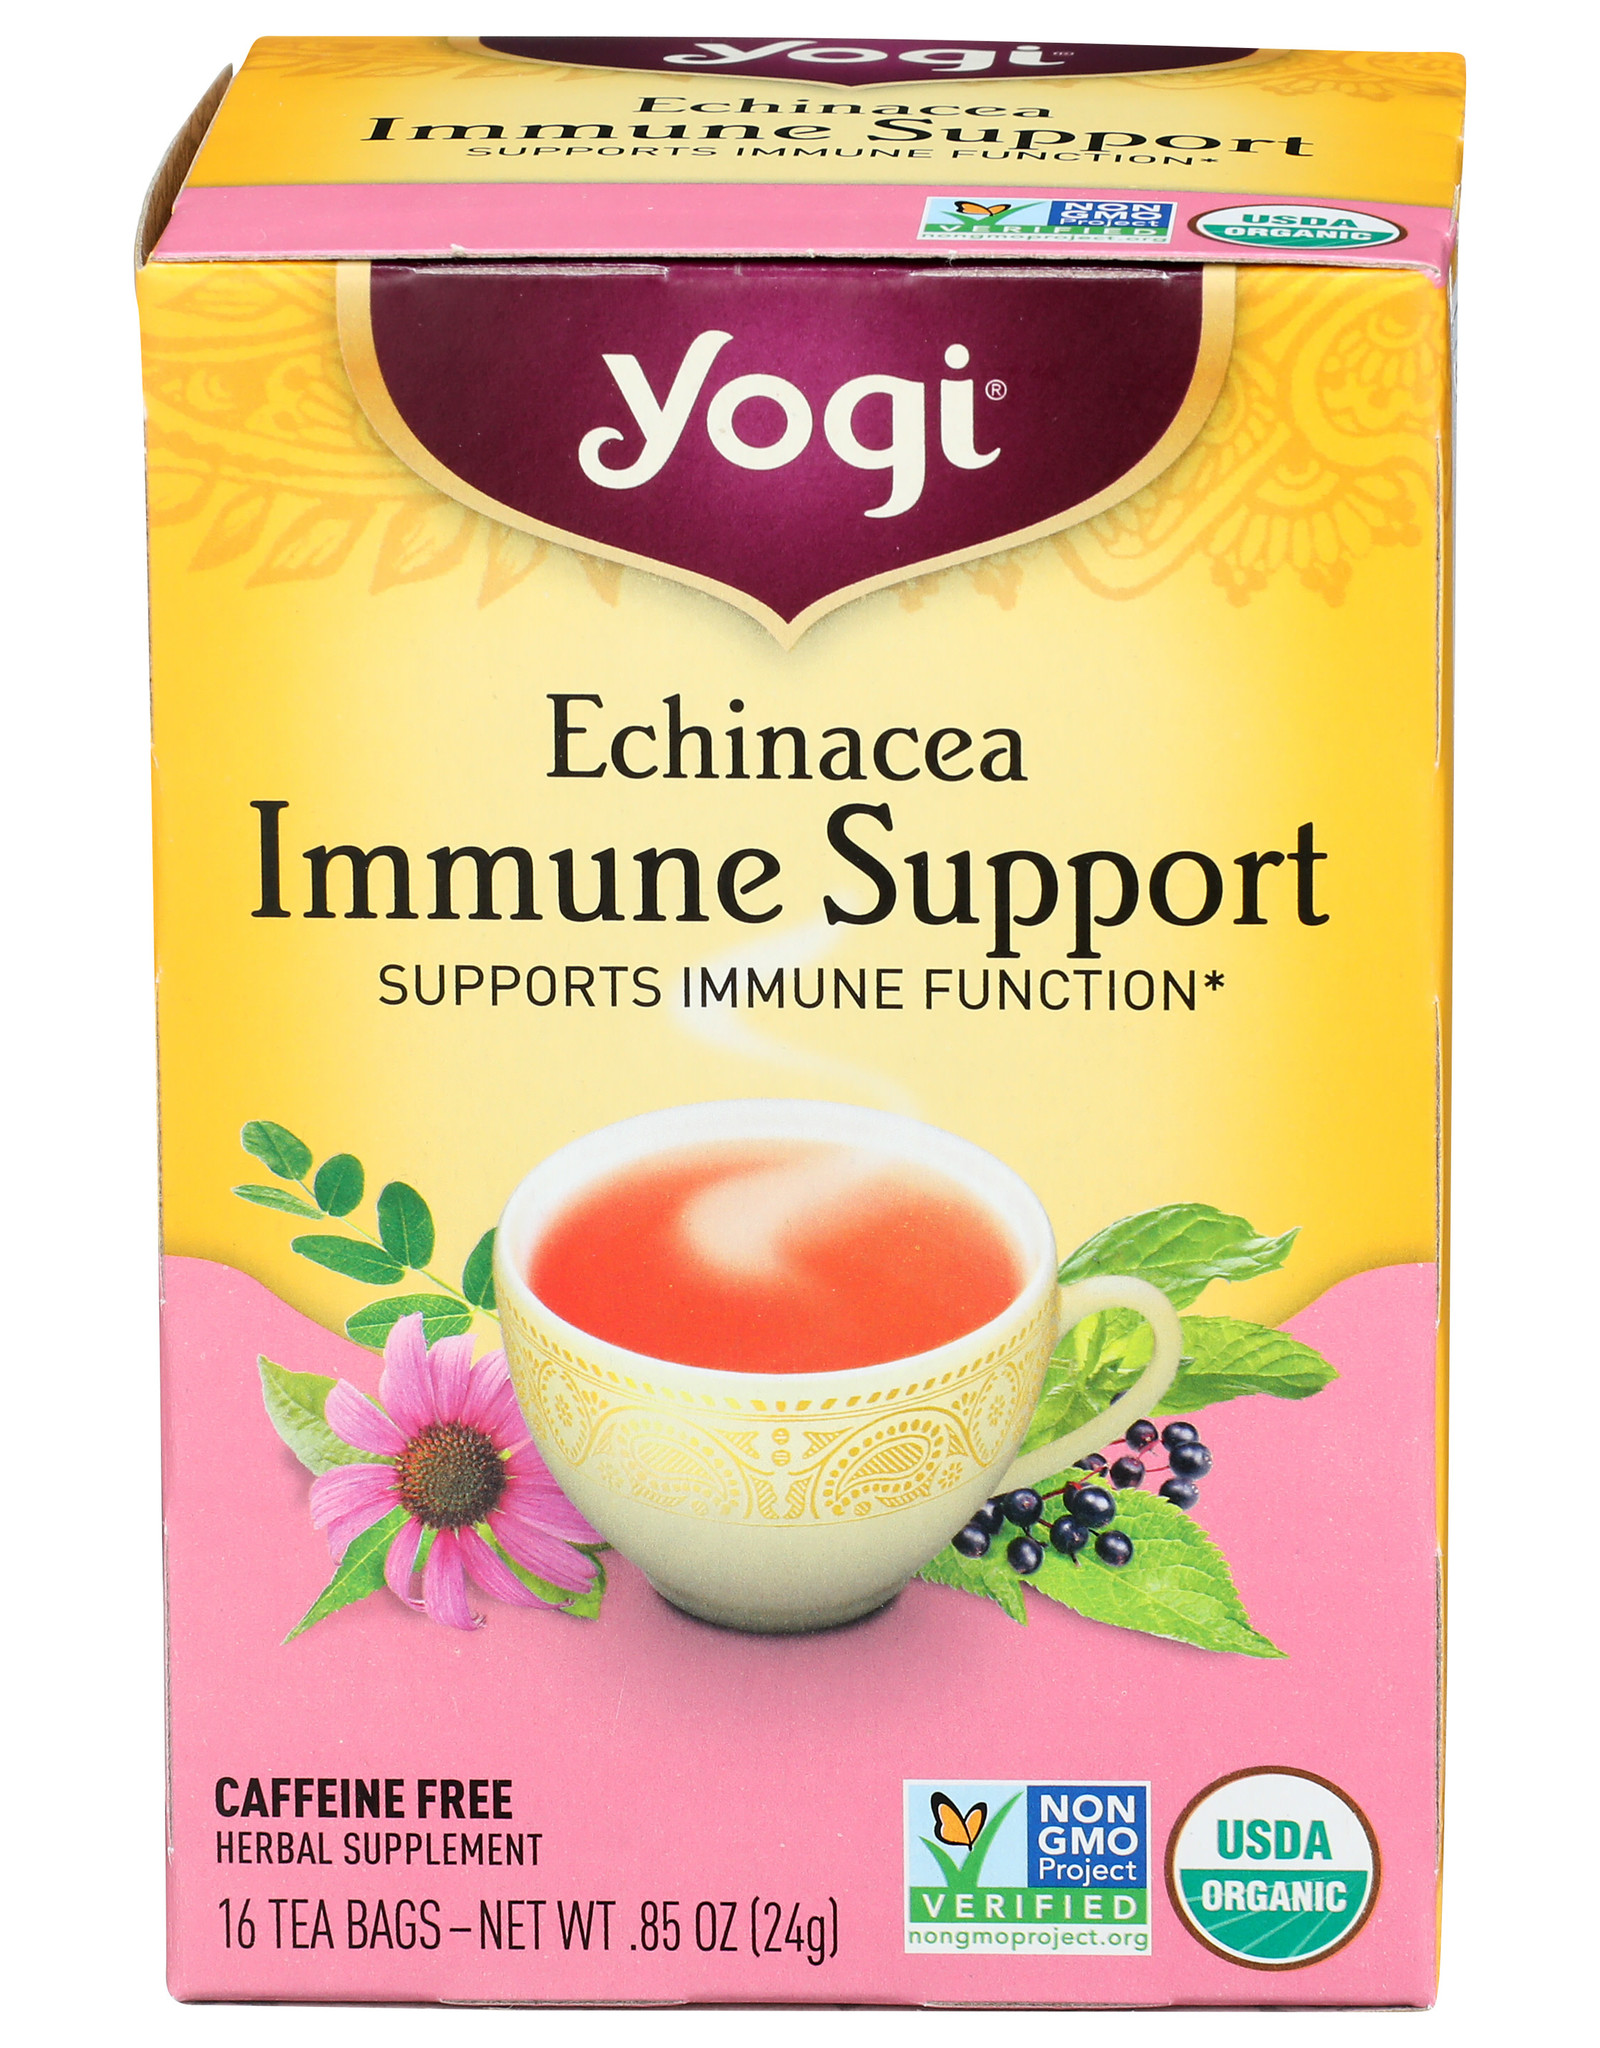 X Yogi Tea - OG Echinacea Immune